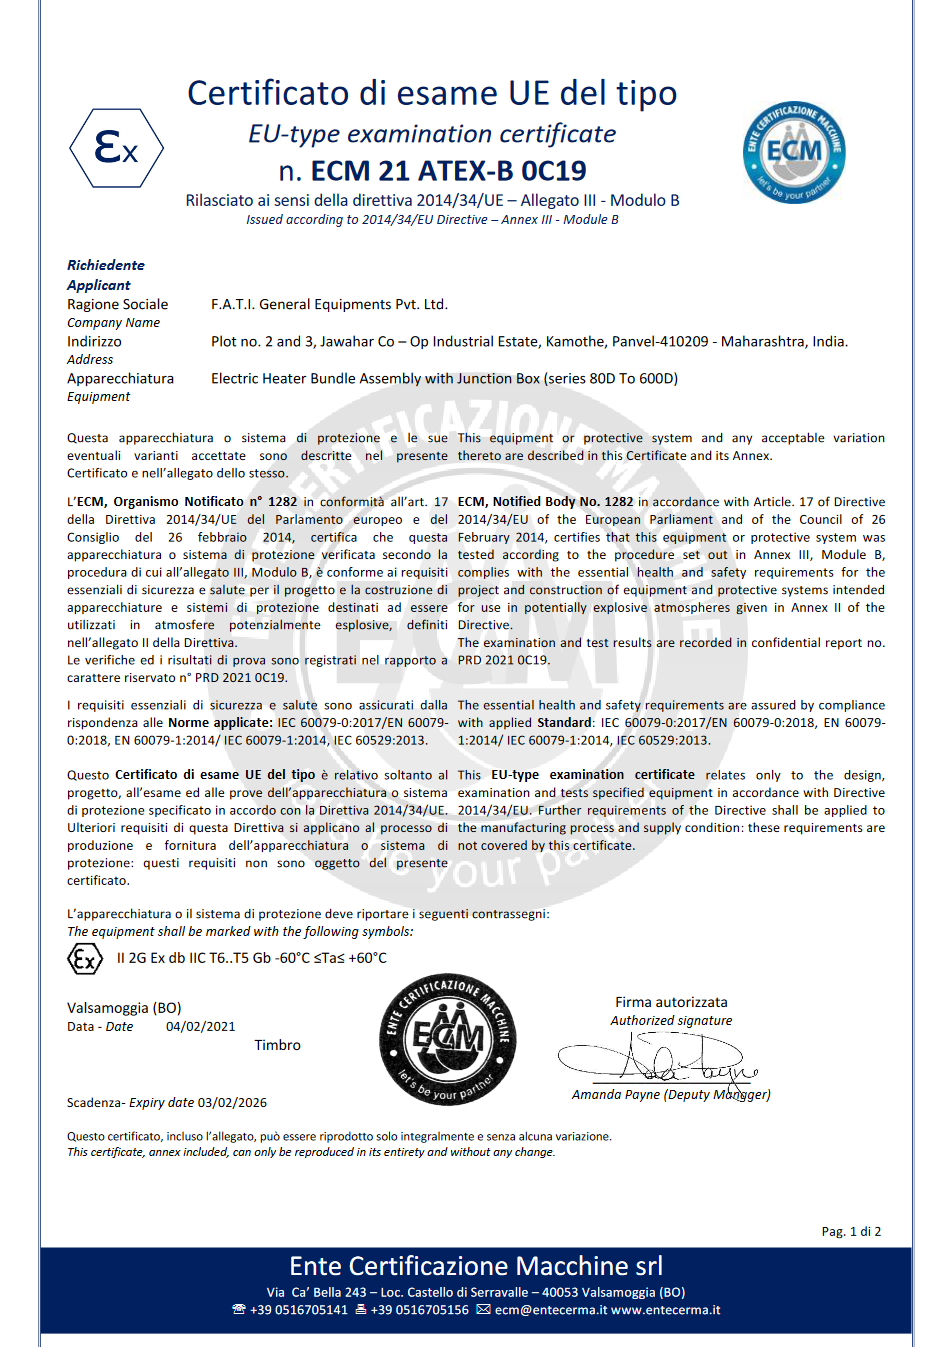 EU-type Examination Certificate